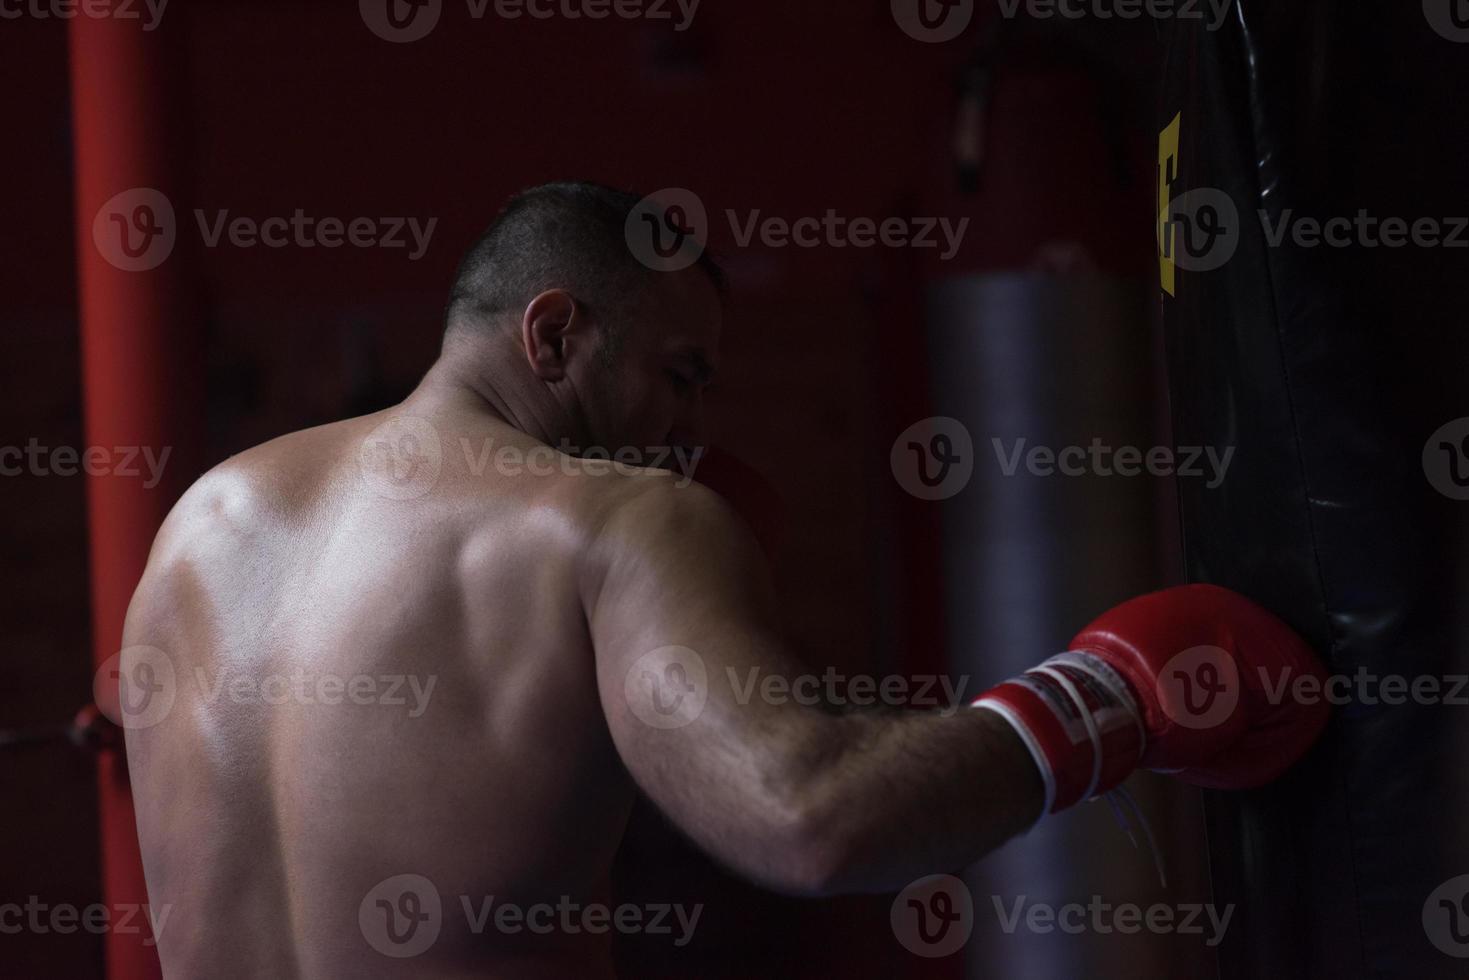 kick boxer training on a punching bag photo